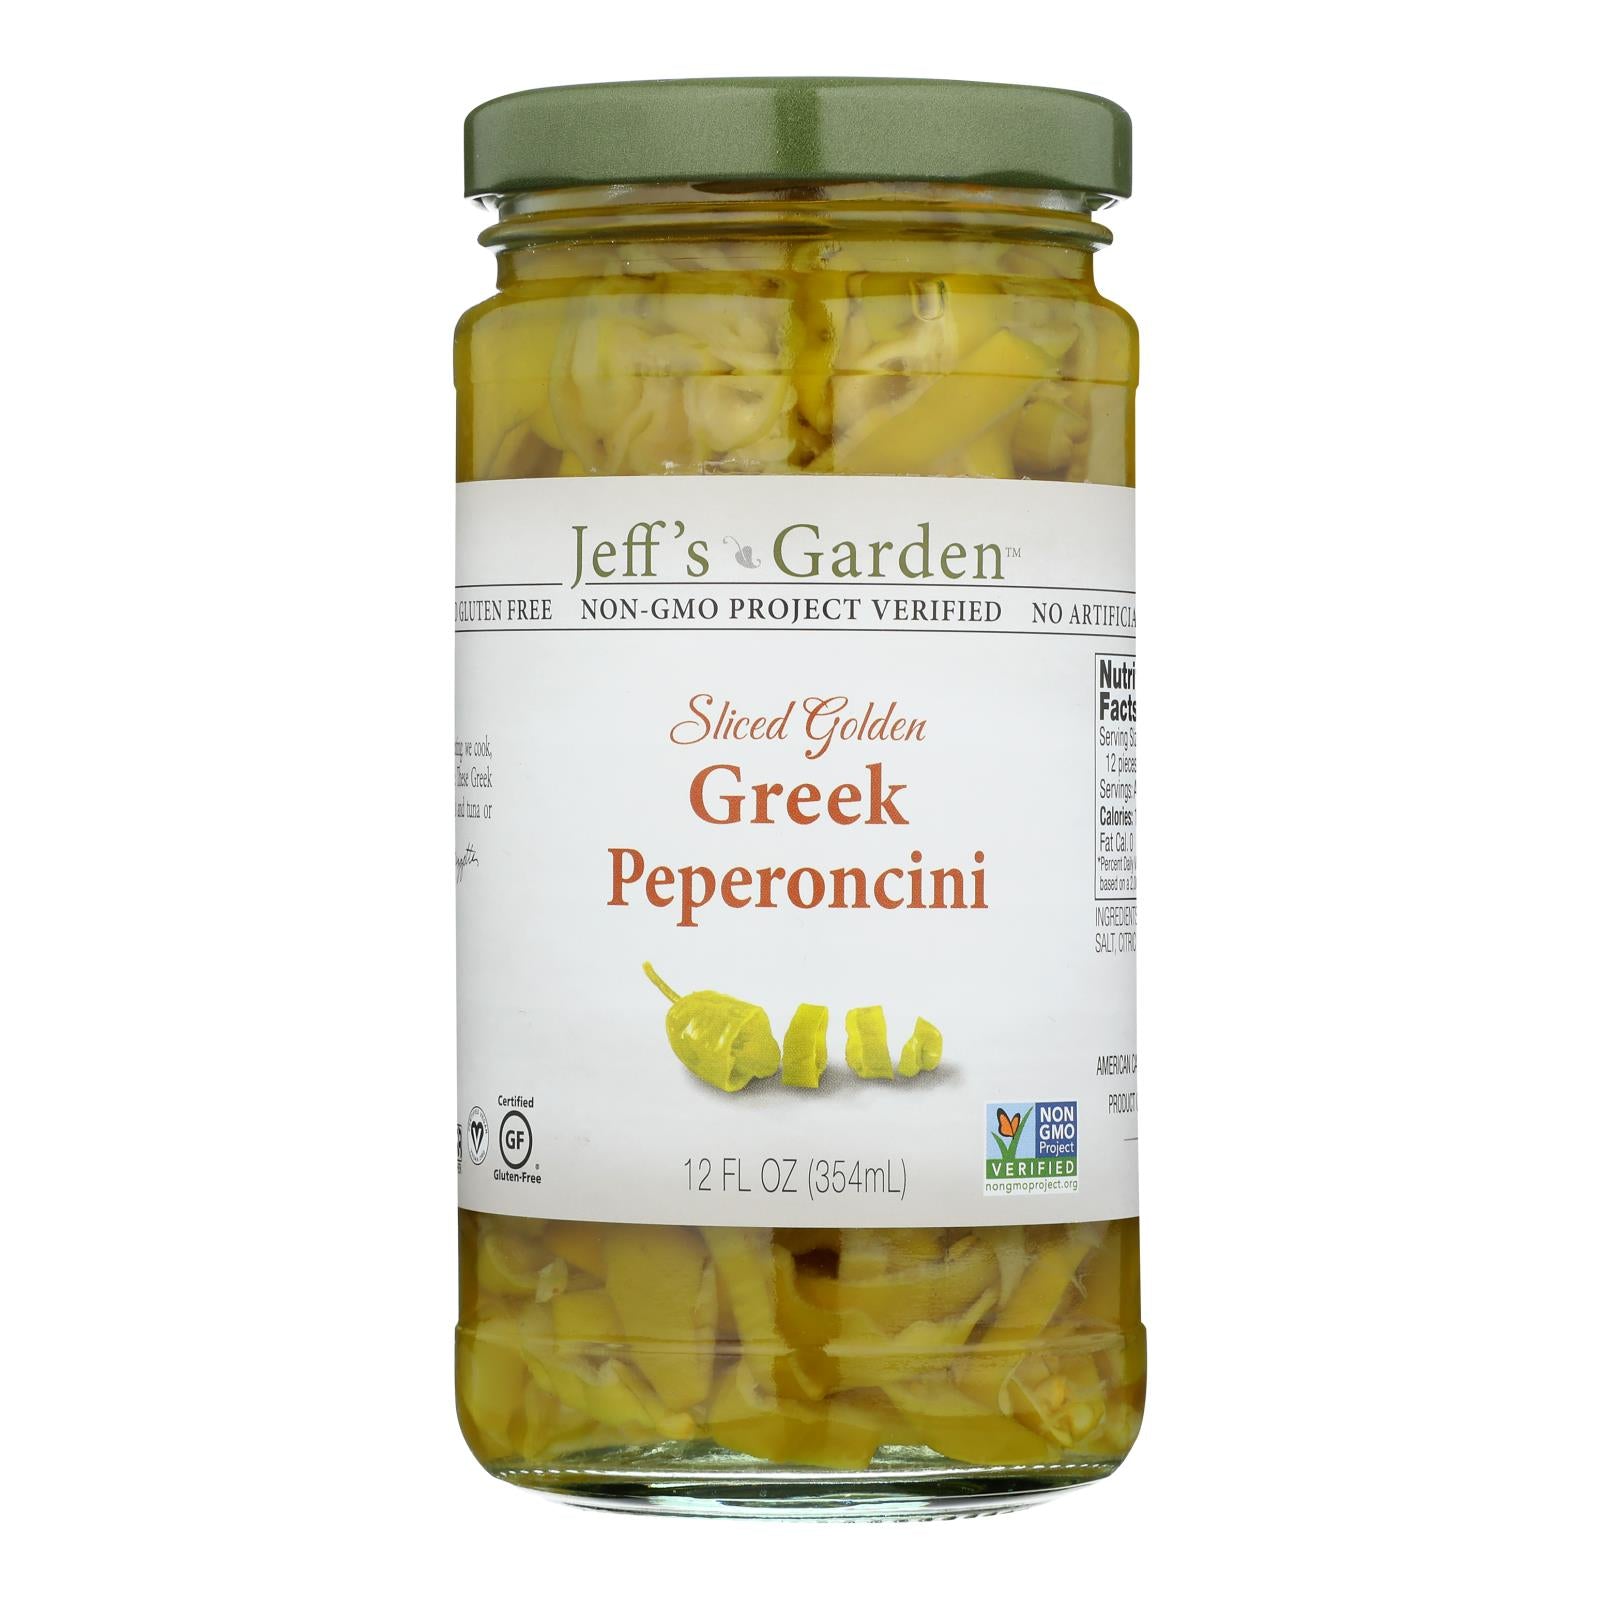 Jeff's Natural Jeff's Natural Greek Pepperoncini - Greek Pepperoncini - Case Of 6 - 12 Oz.